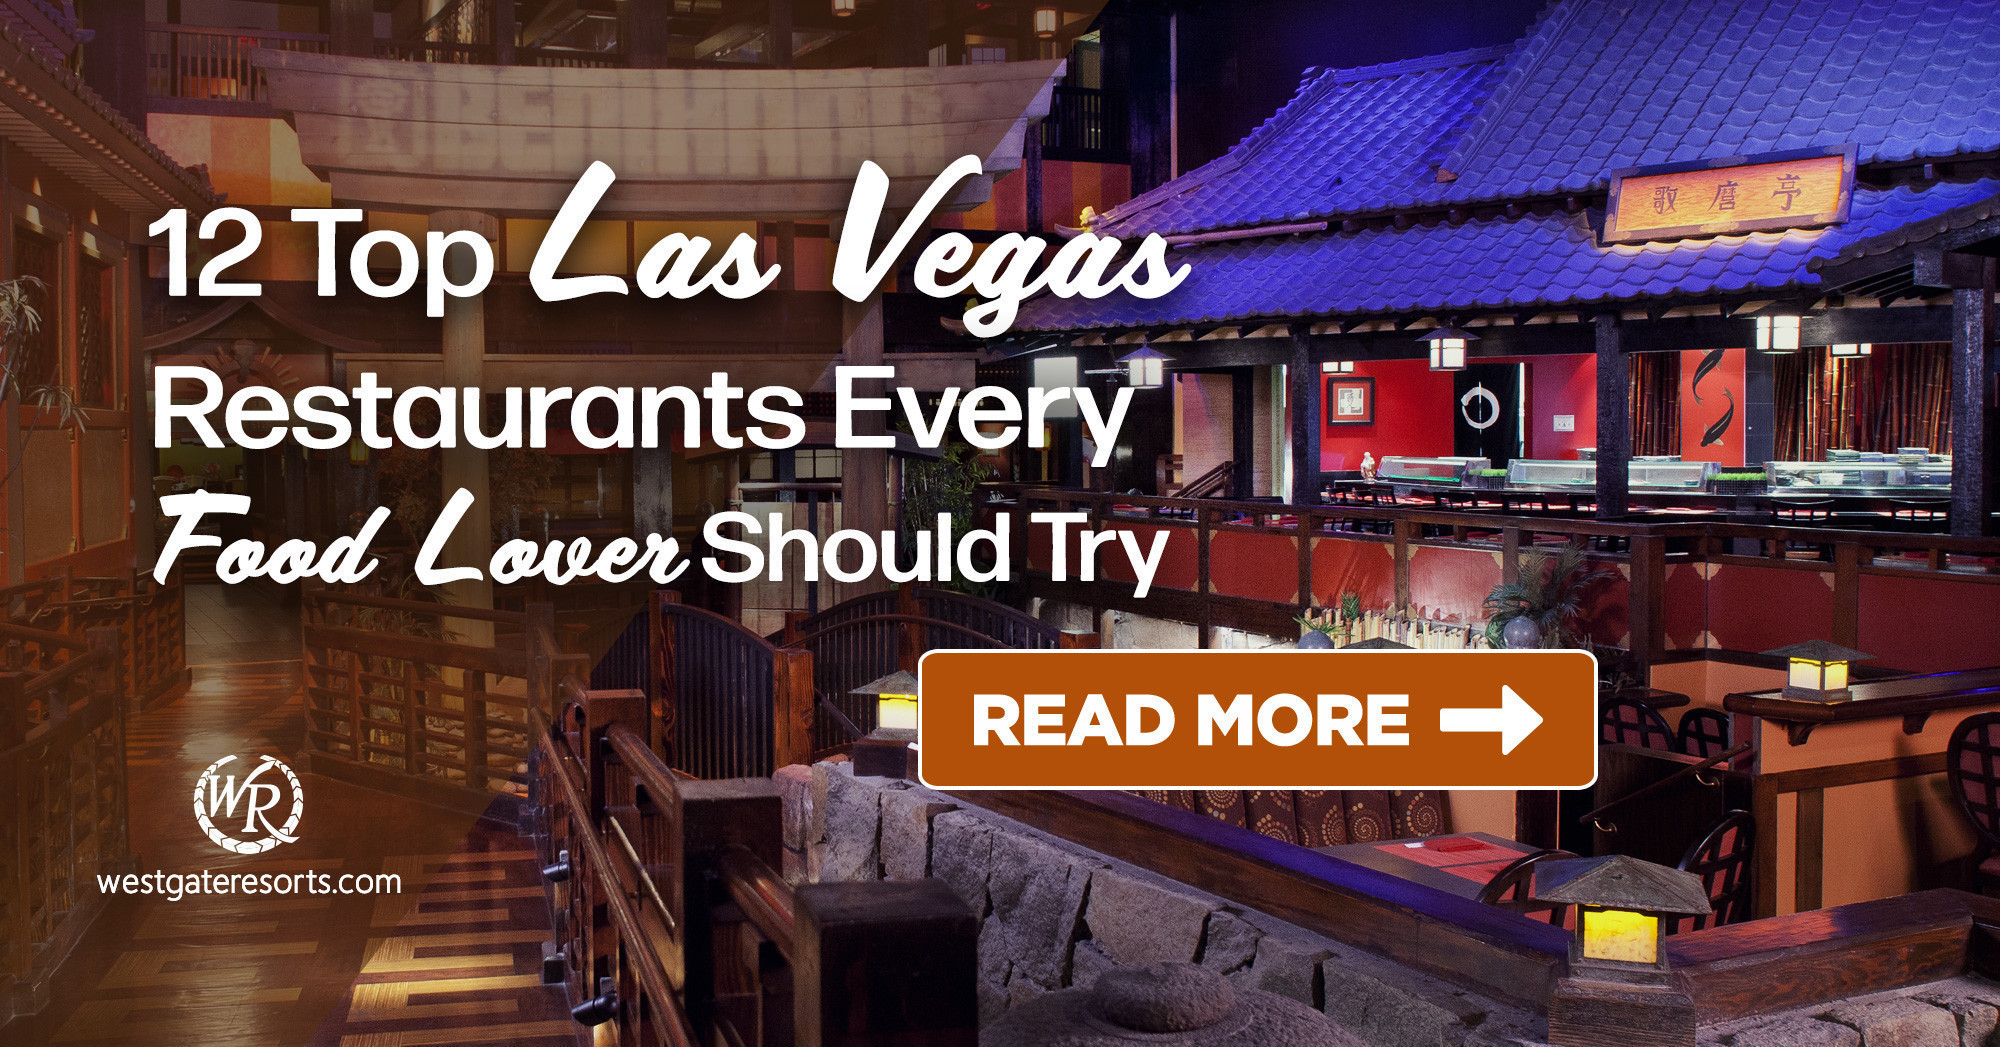 12 Top Las Vegas Restaurants Every Food Lover Should Try